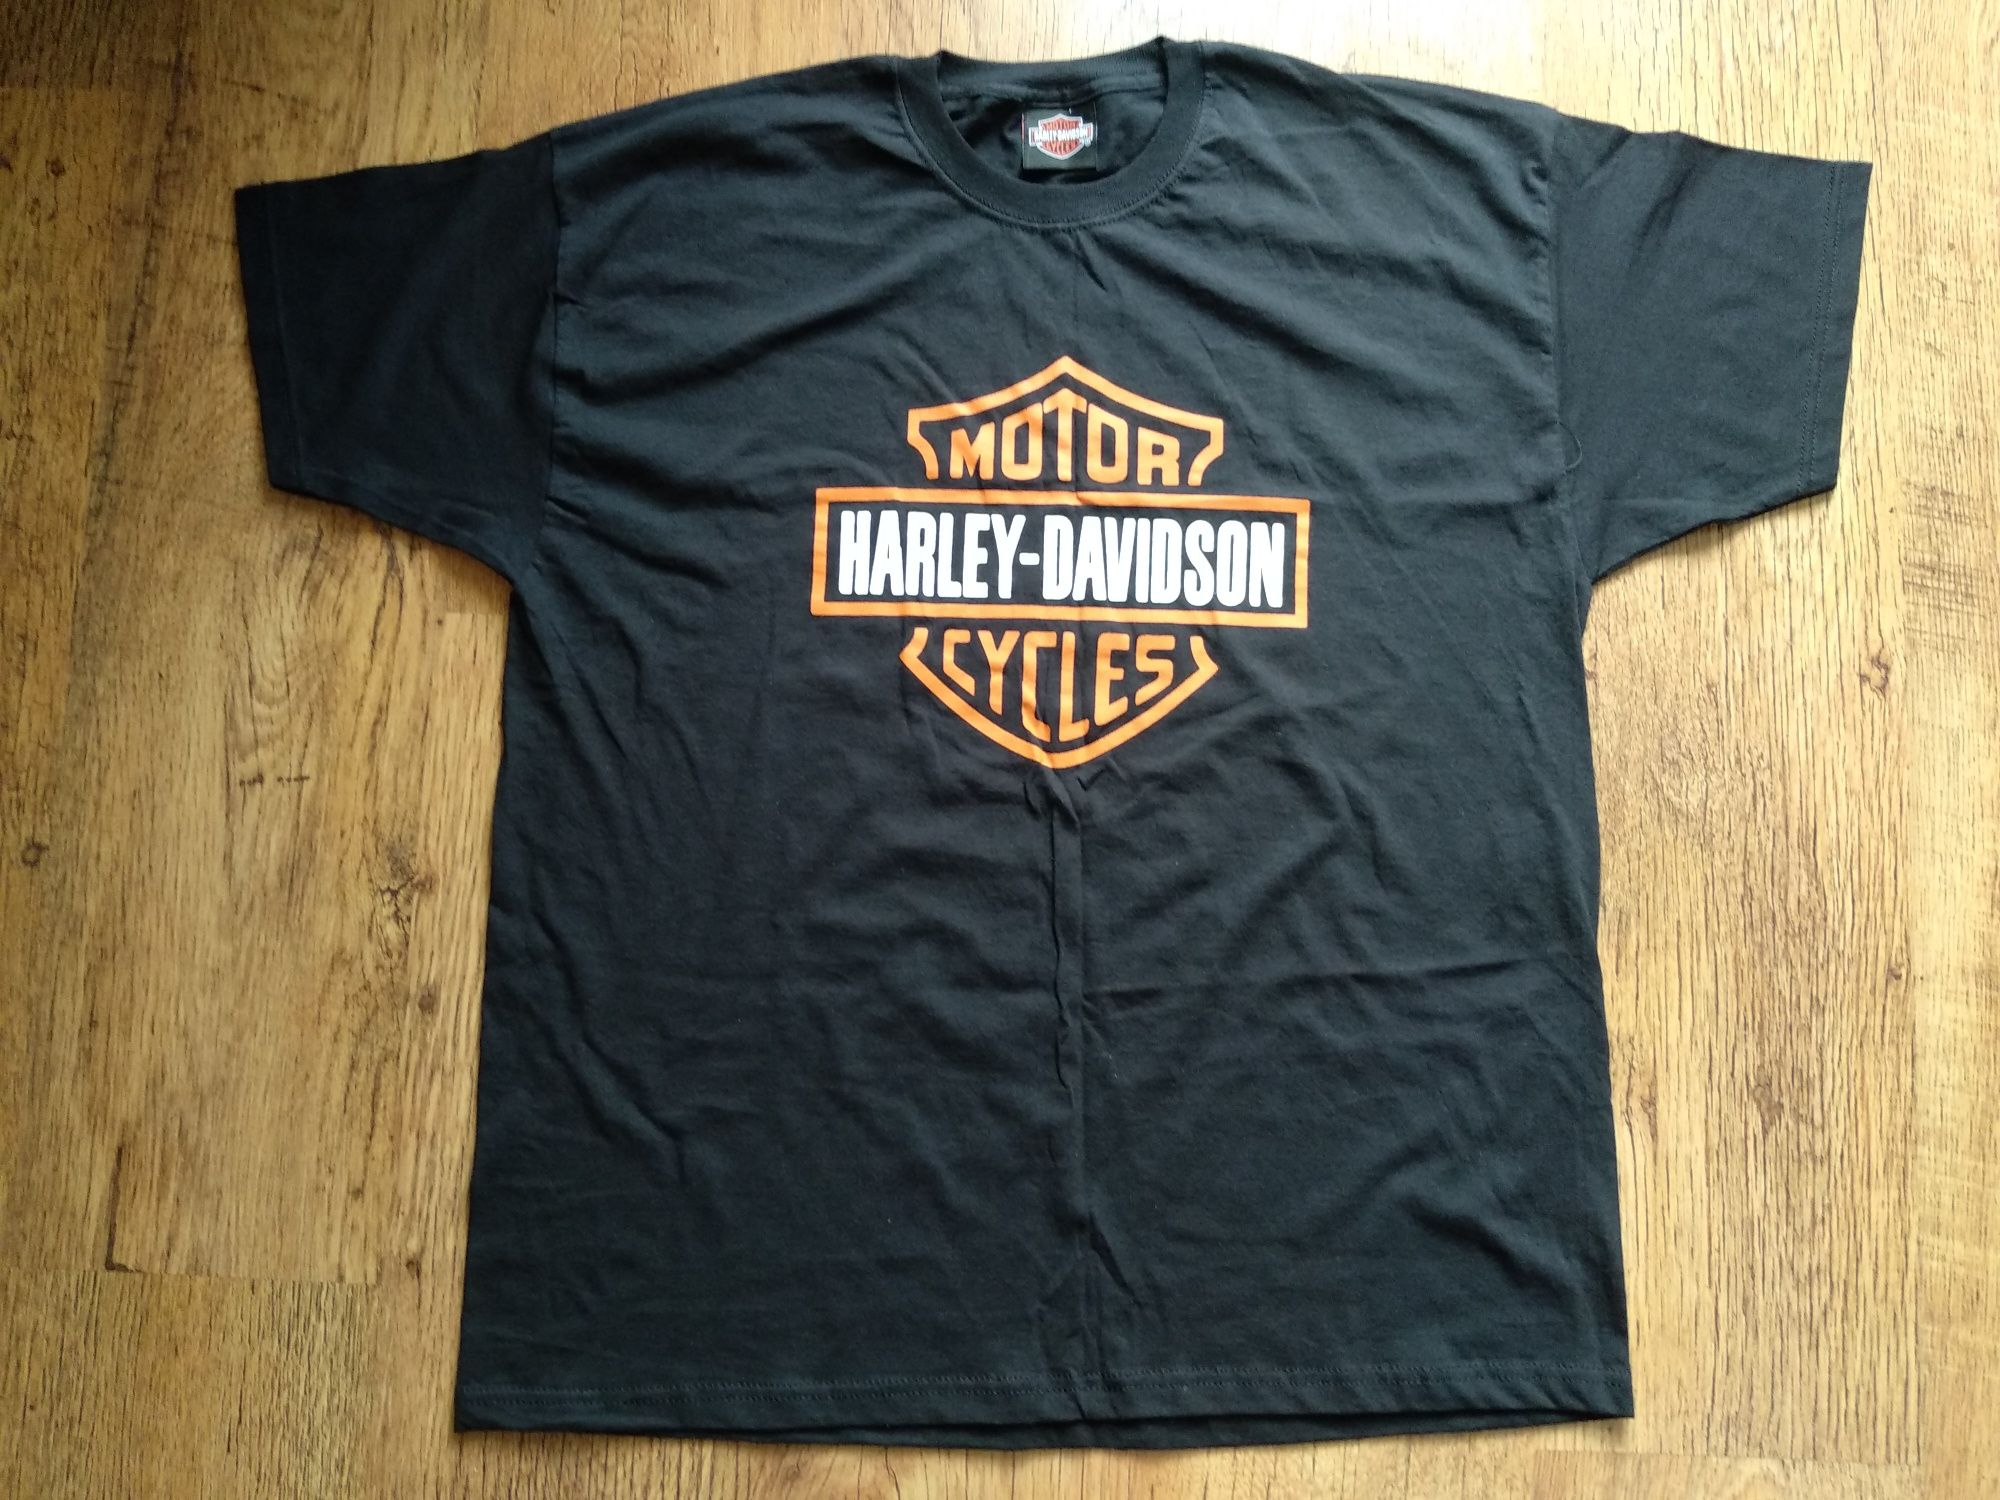 Koszulka  Harley Davidson rozmiar XXL,koszulka Harley Davidson